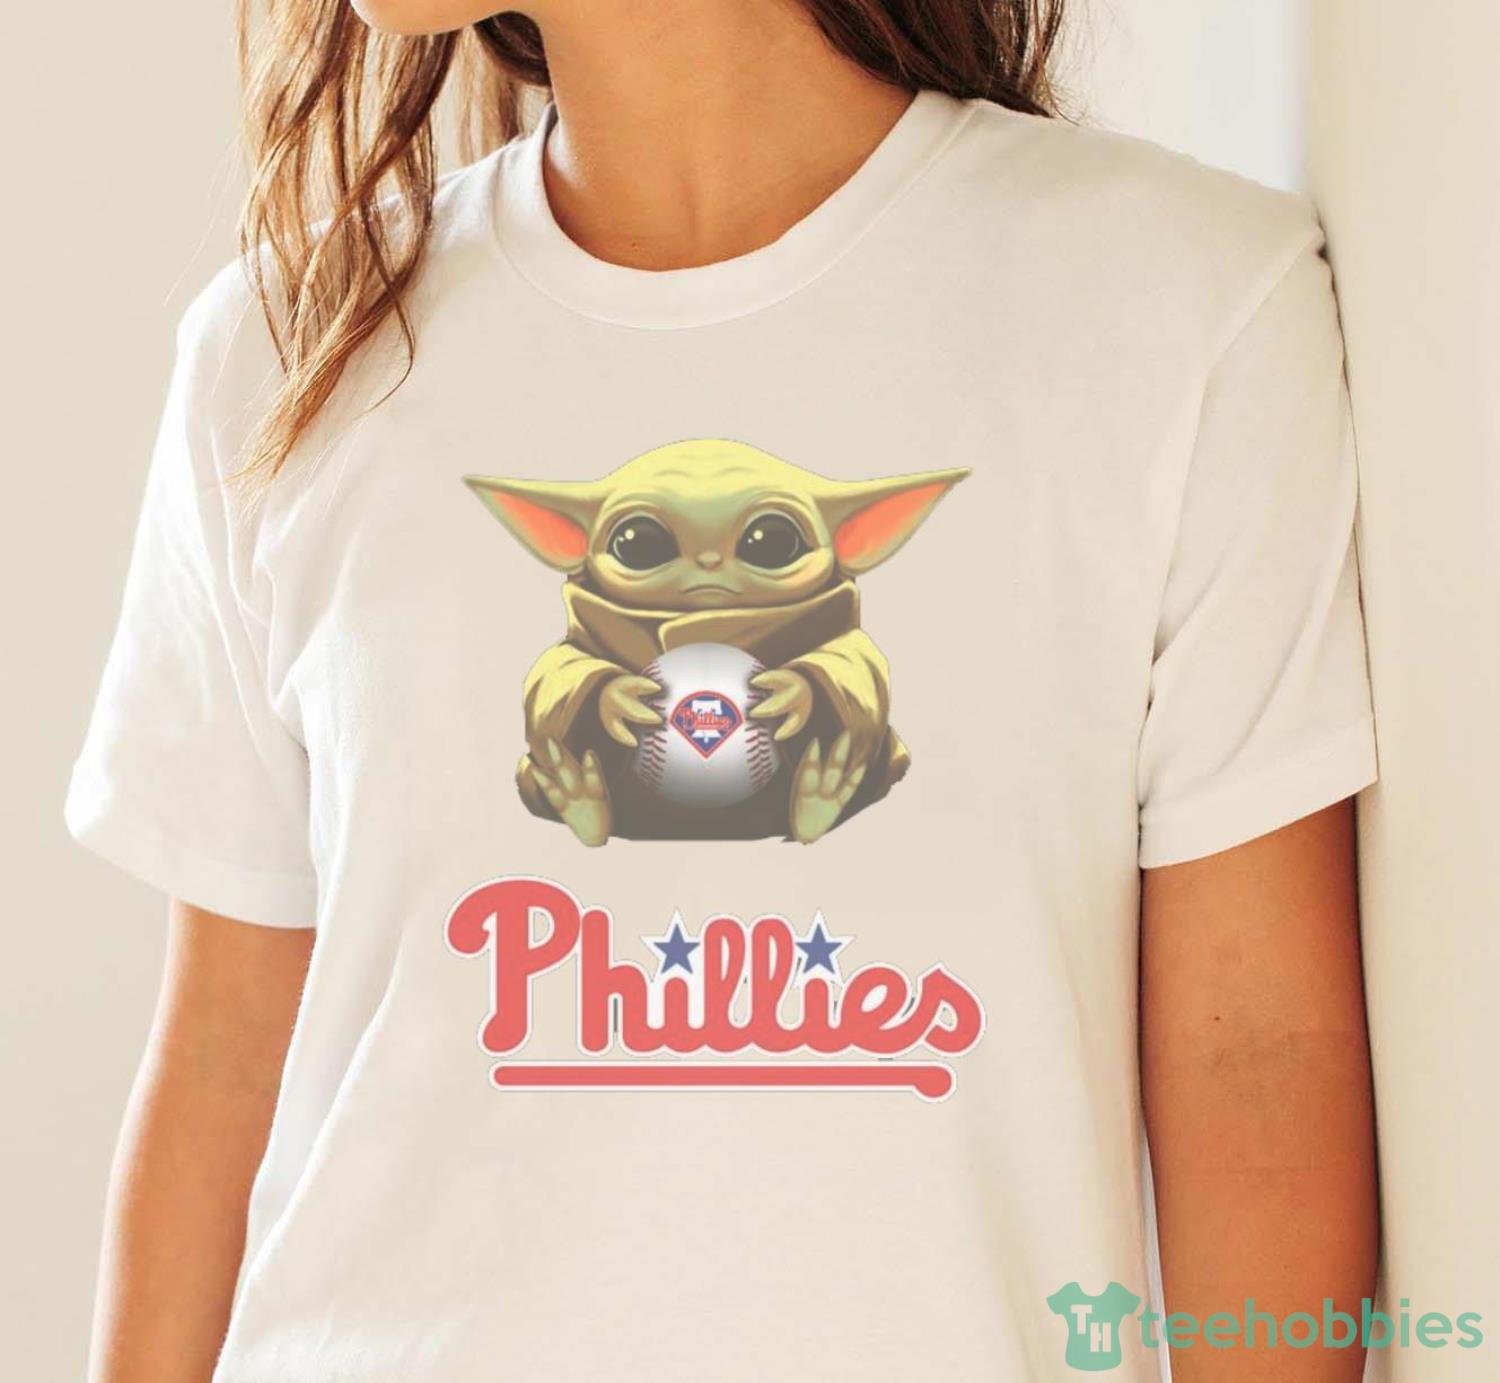 MLB Baseball Philadelphia Phillies Star Wars Baby Yoda Shirt T Shirt - White Ladies T-Shirt